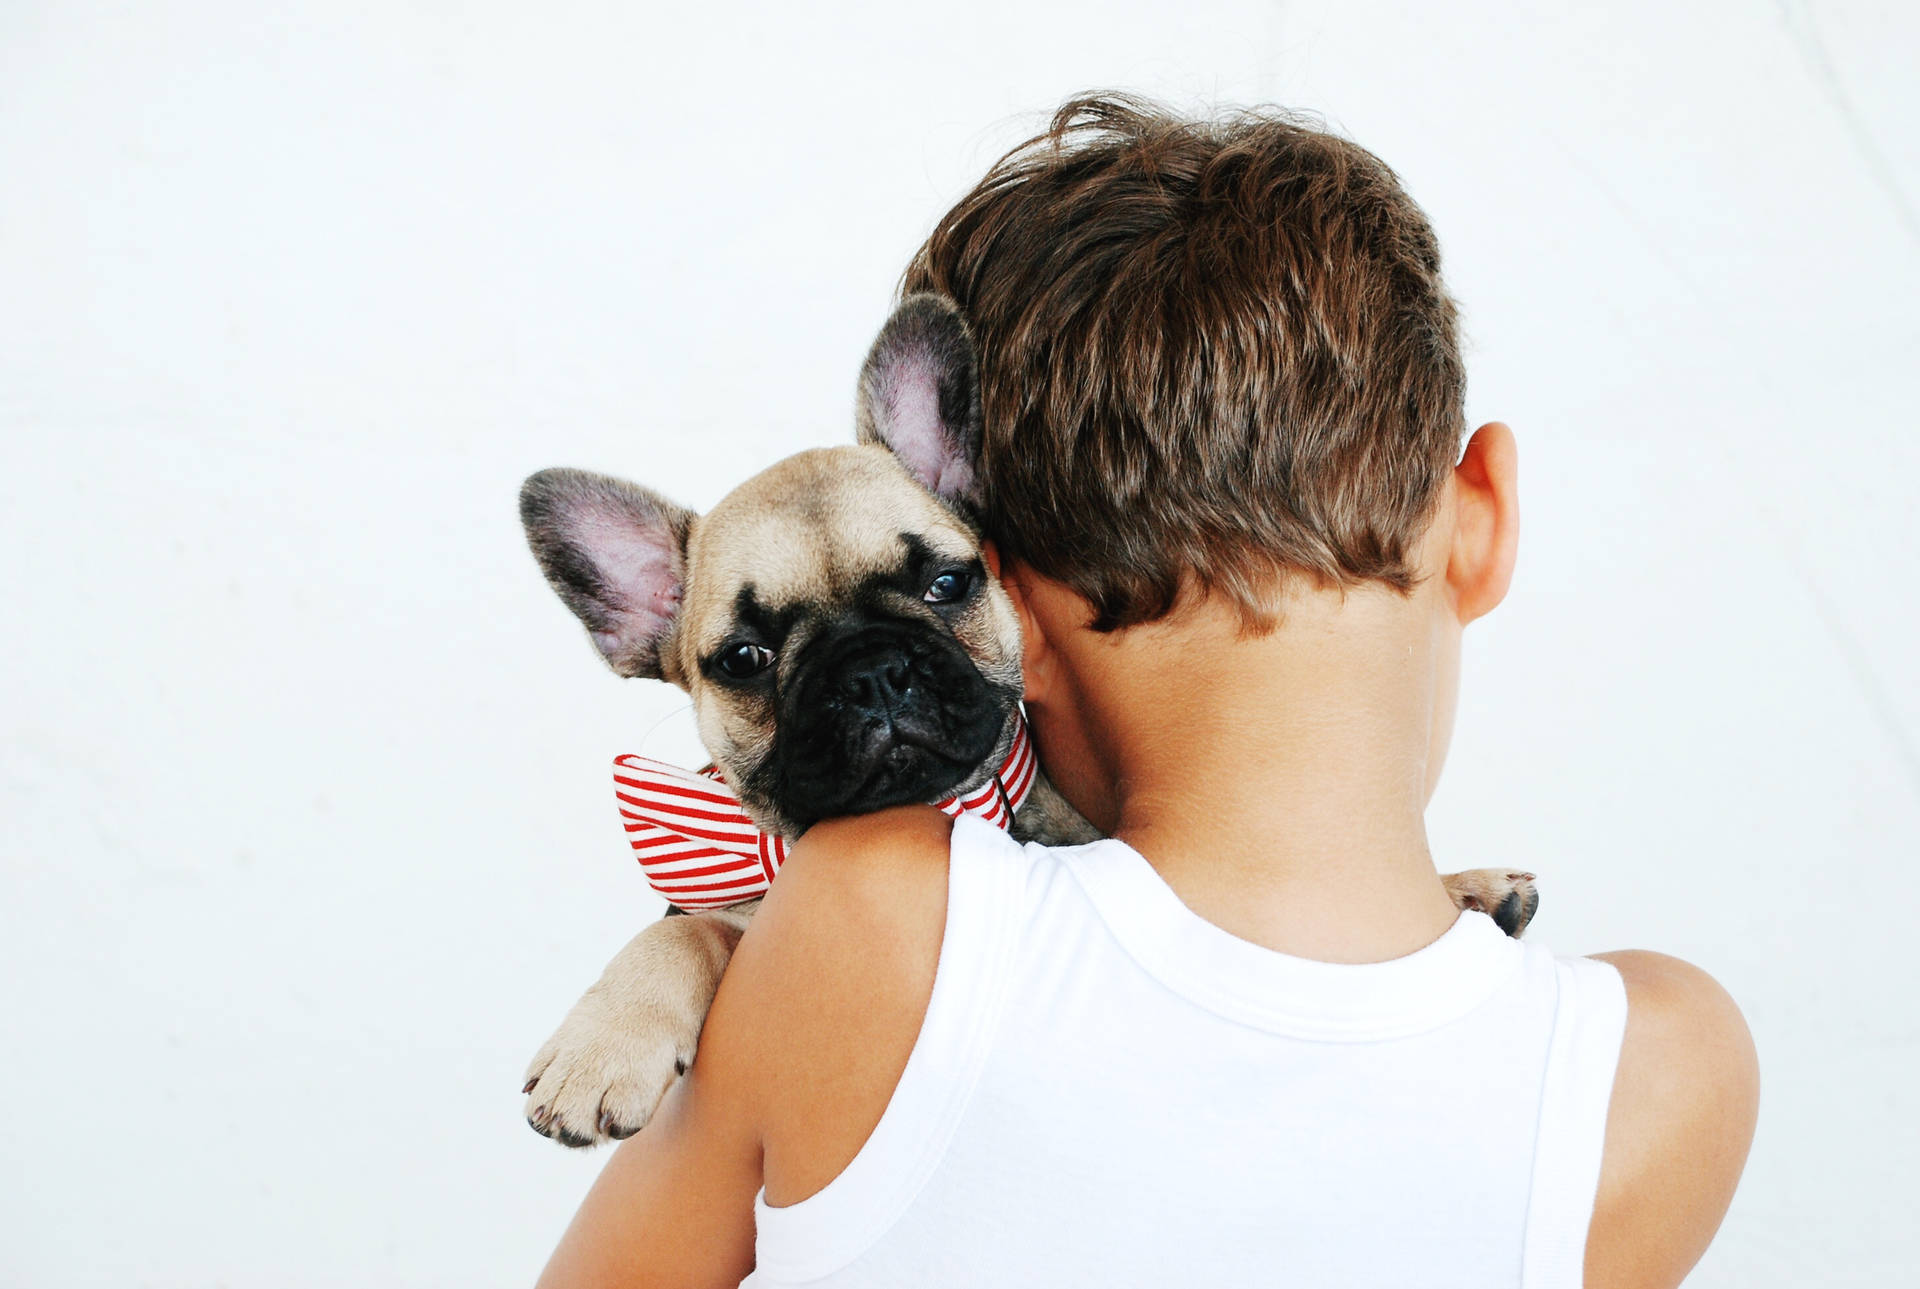 "Loving Companionship: A Young Boy Embracing His Pet Dog" Wallpaper